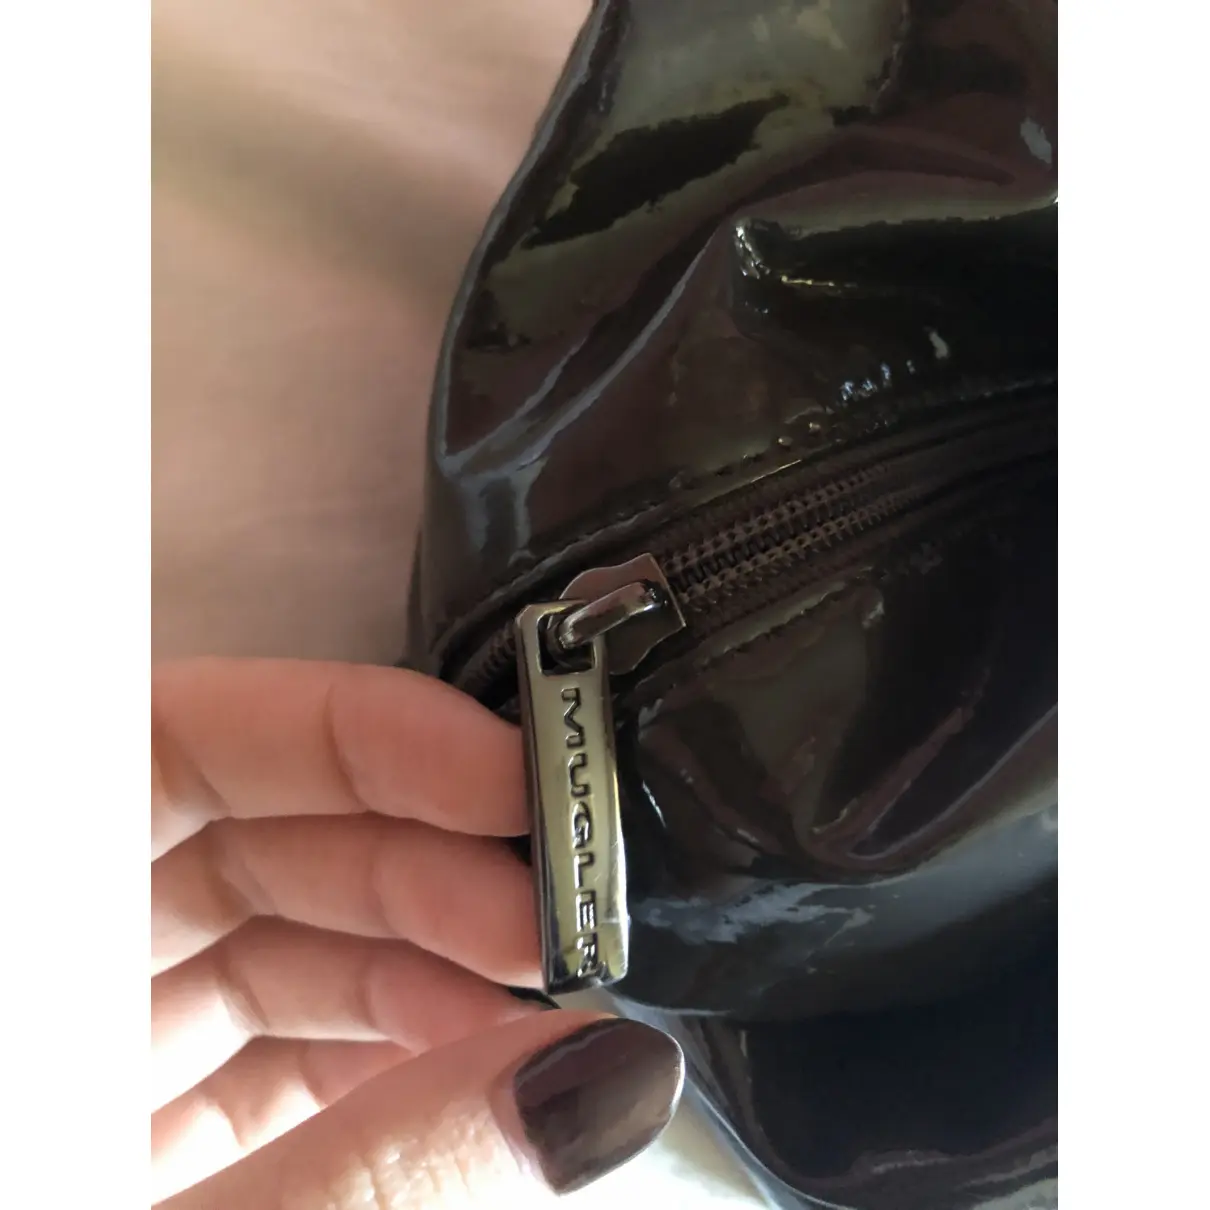 Patent leather handbag Mugler